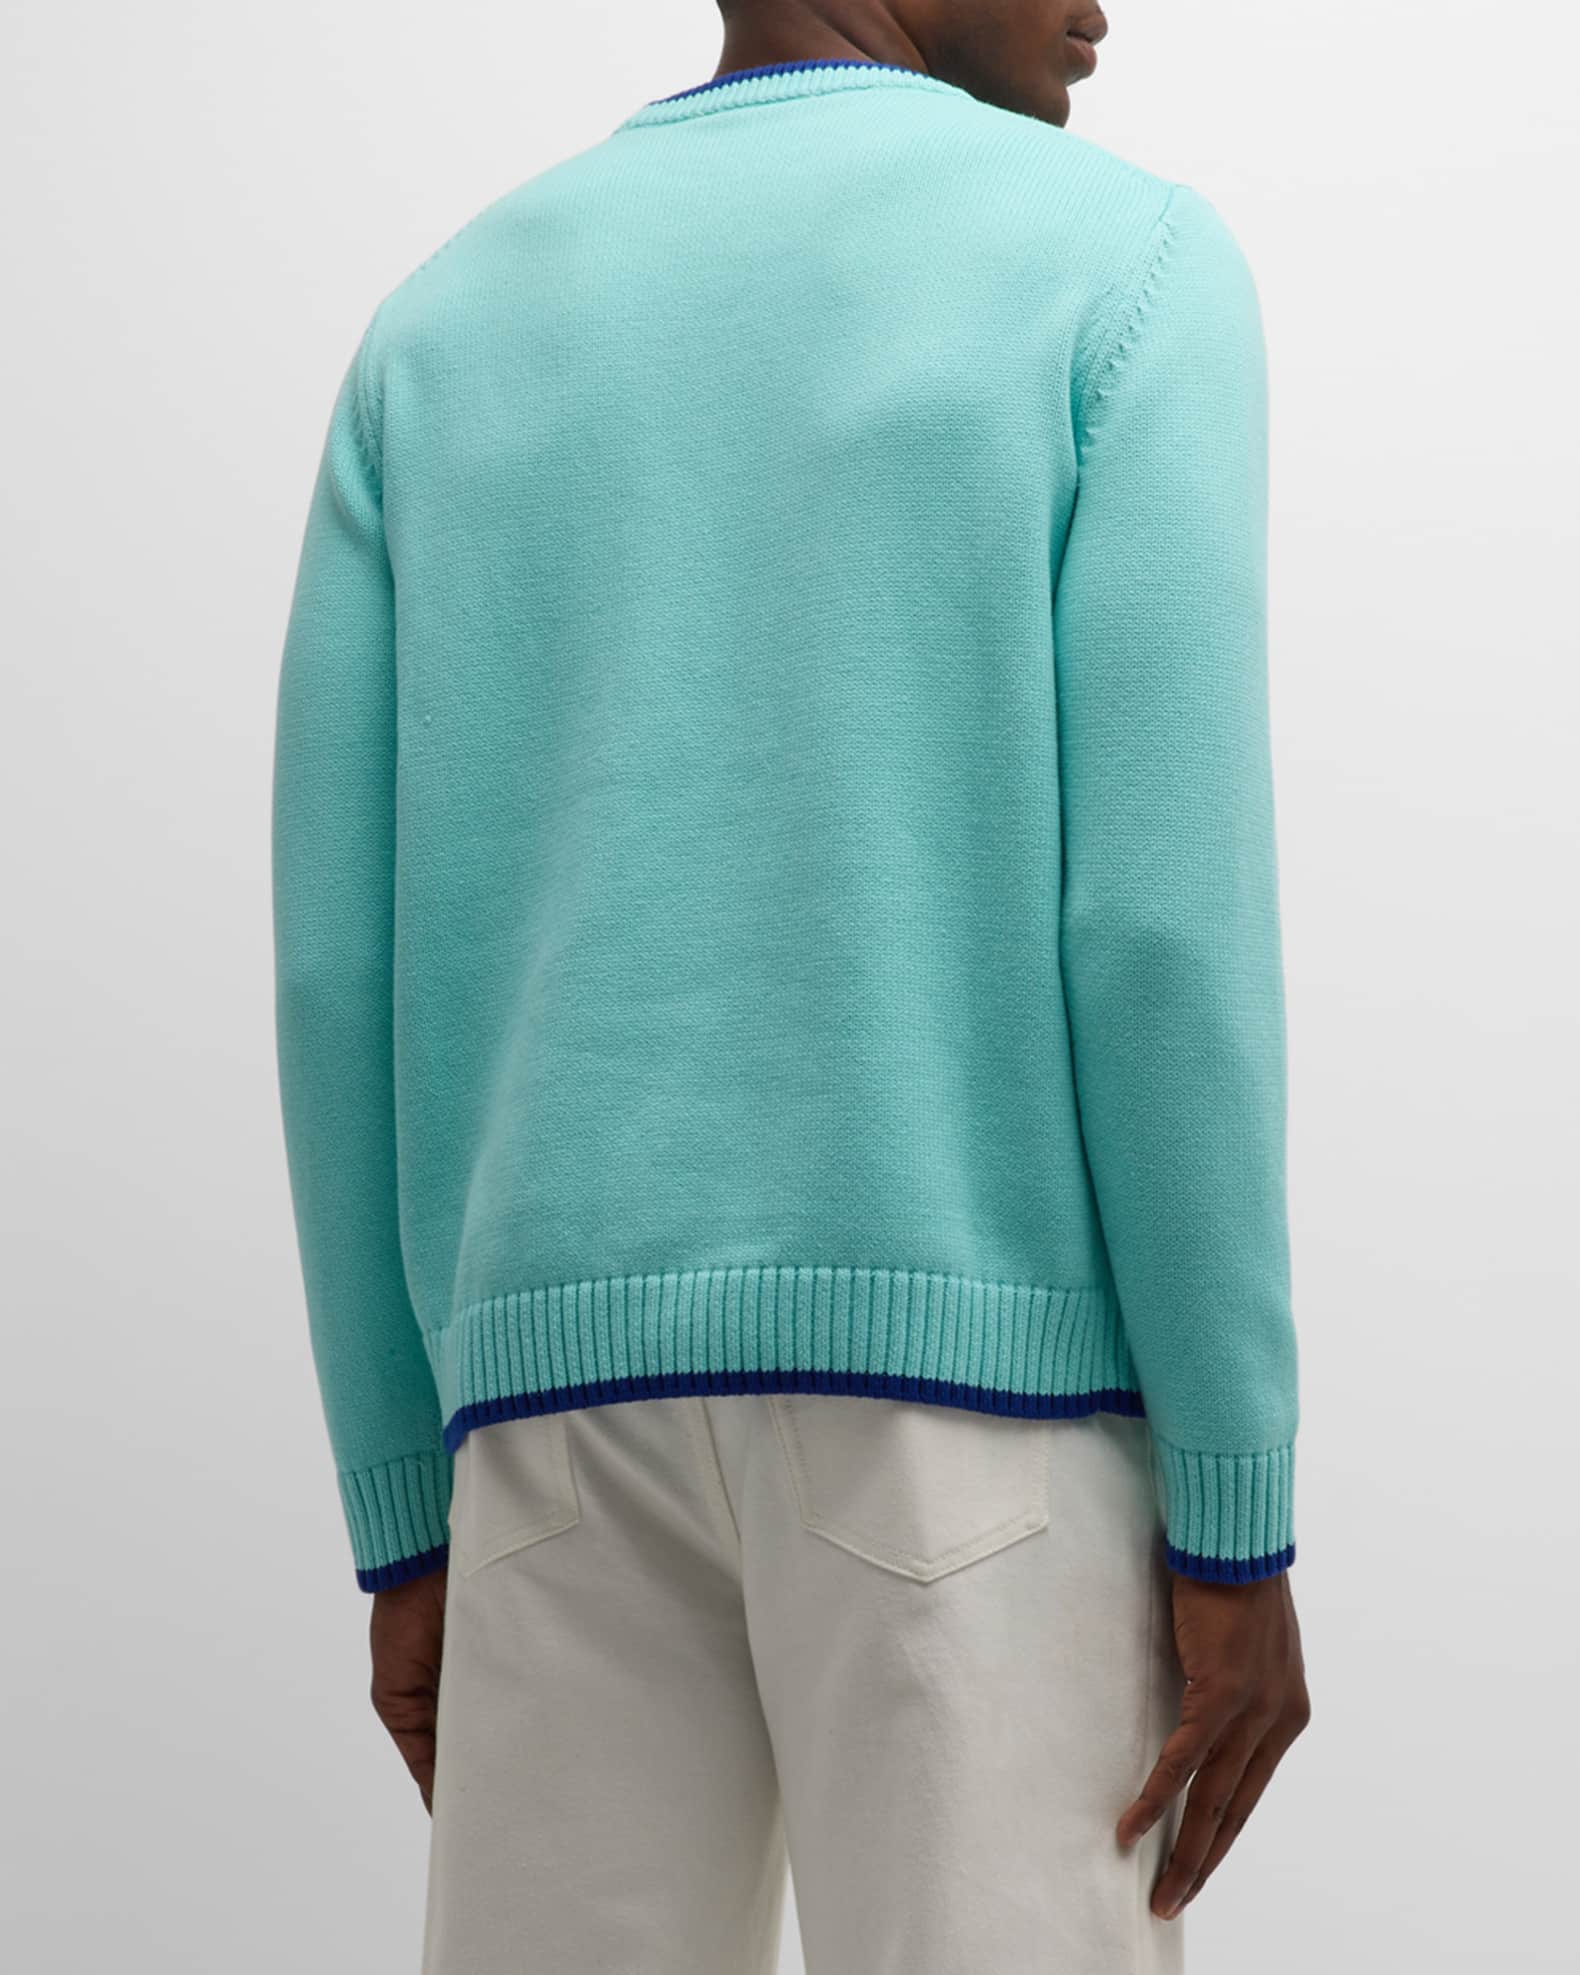 Gucci Boys' Wool Tiger Intarsia Sweater - Blue Sizes 7-16, Boys